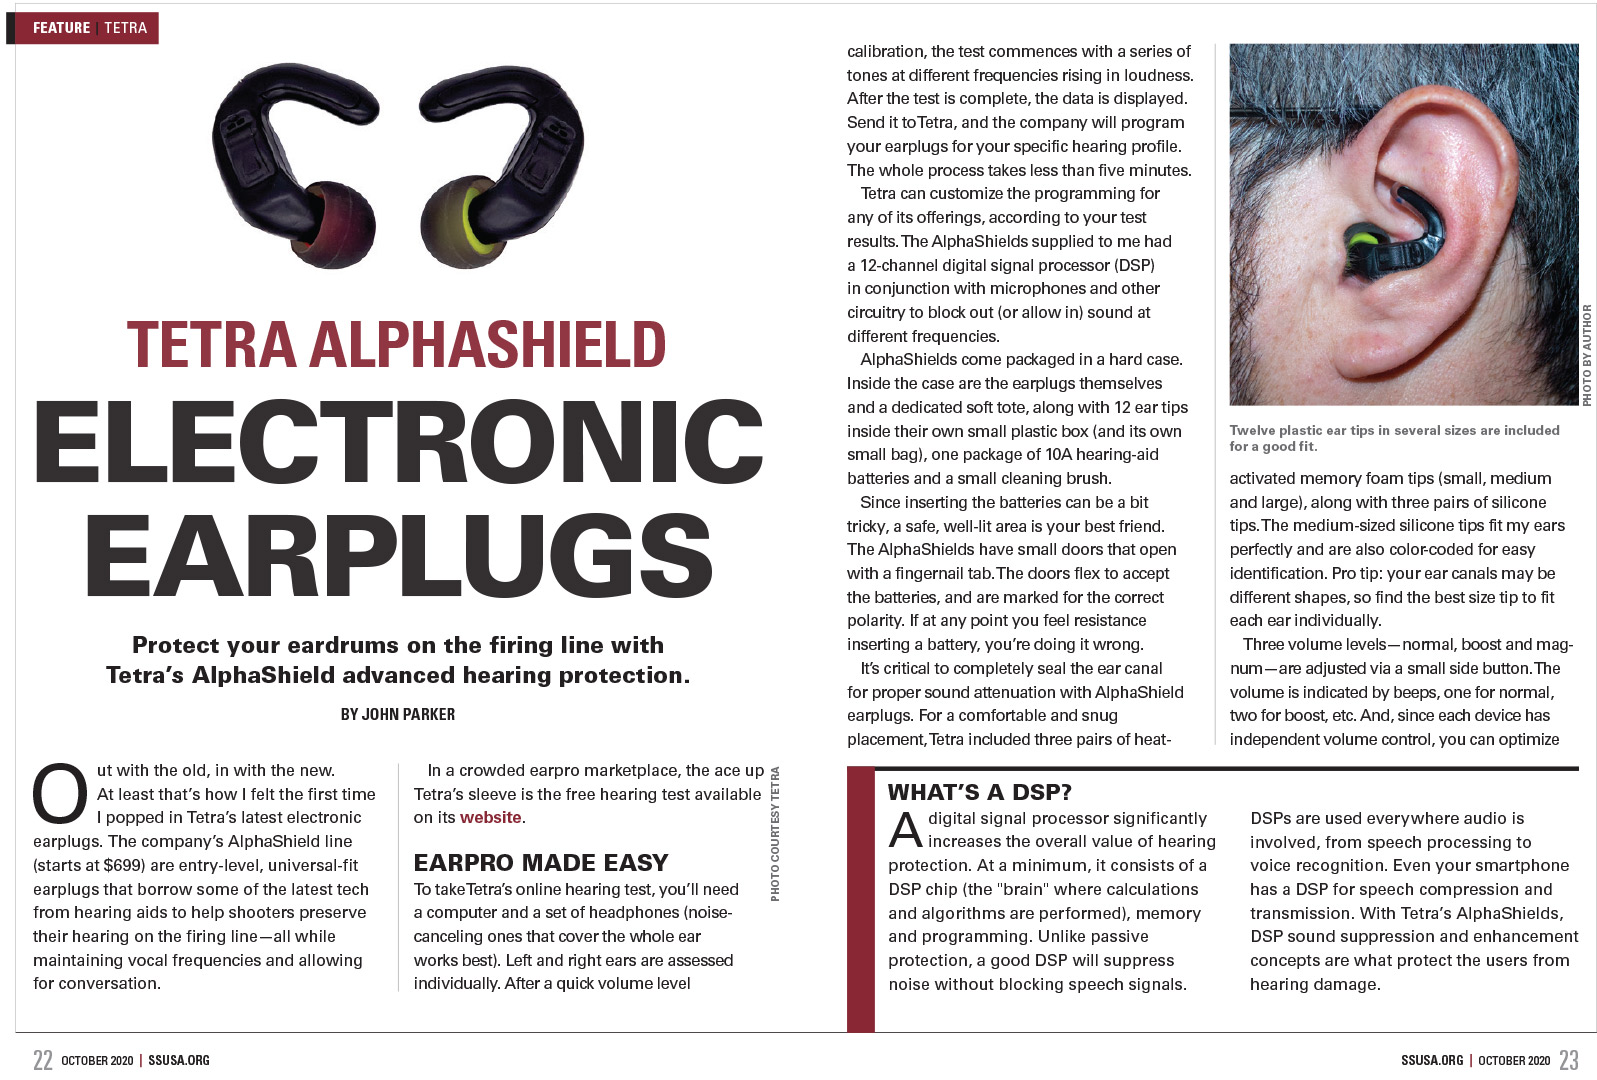 Tetra AlphaShield earplugs